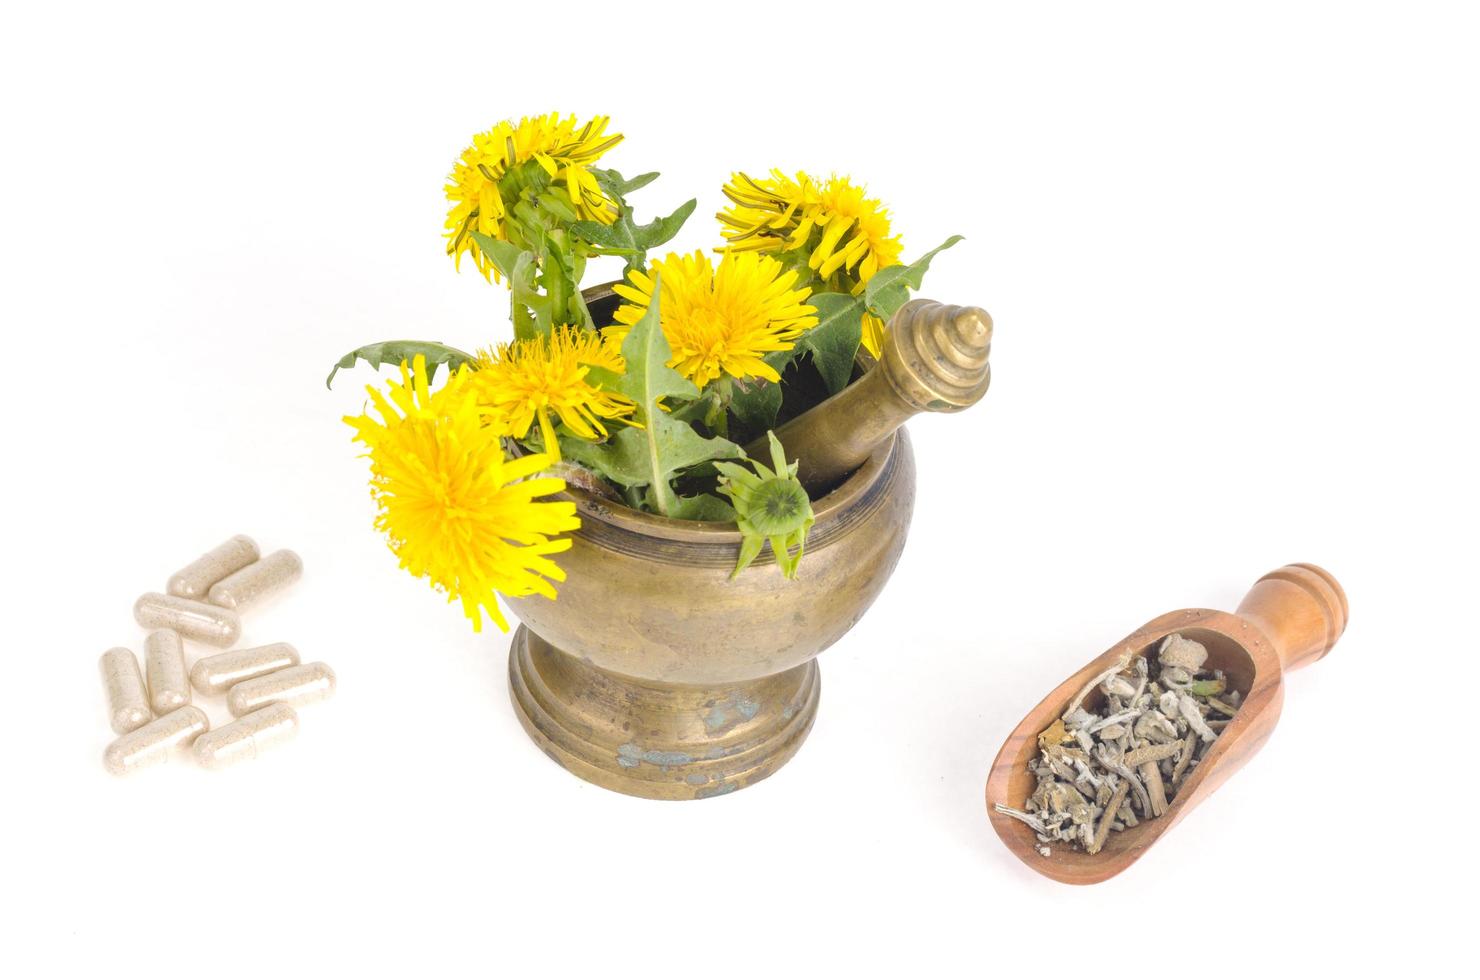 Herbals in mortar and modern medicines, herbal medicine in capsules. photo